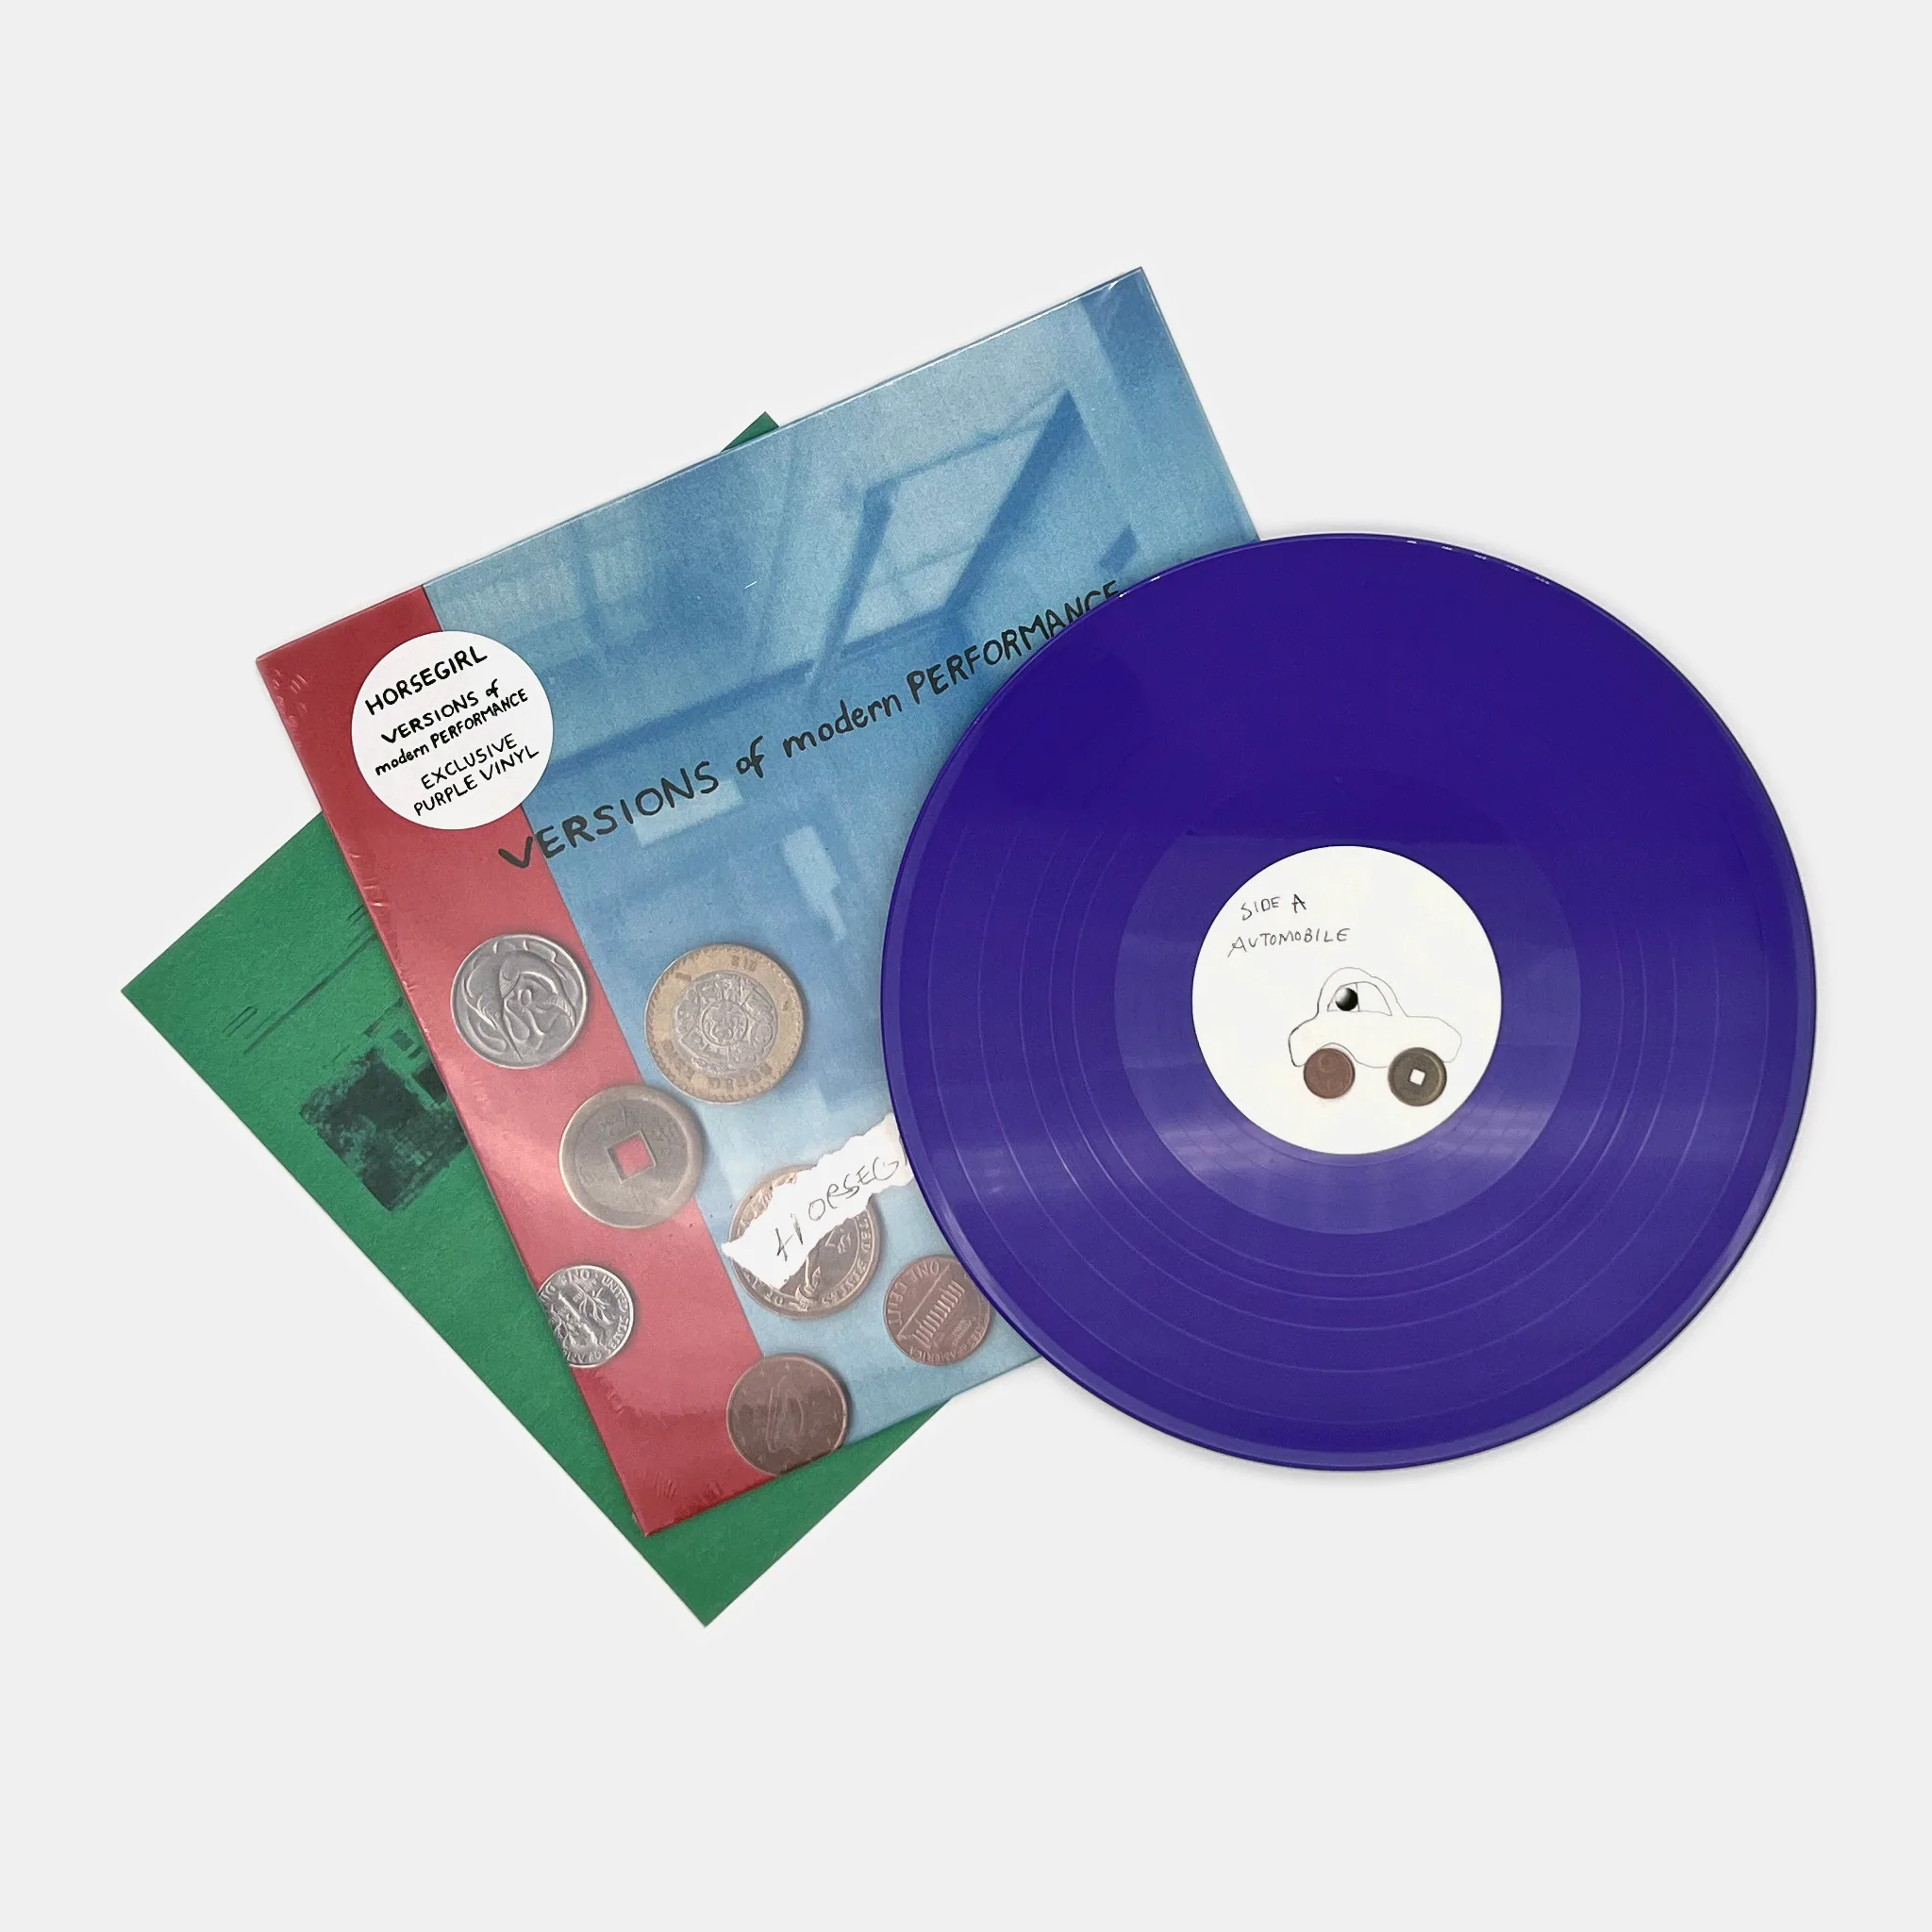 Horsegirl "Versions of Modern Performance" Purple LP